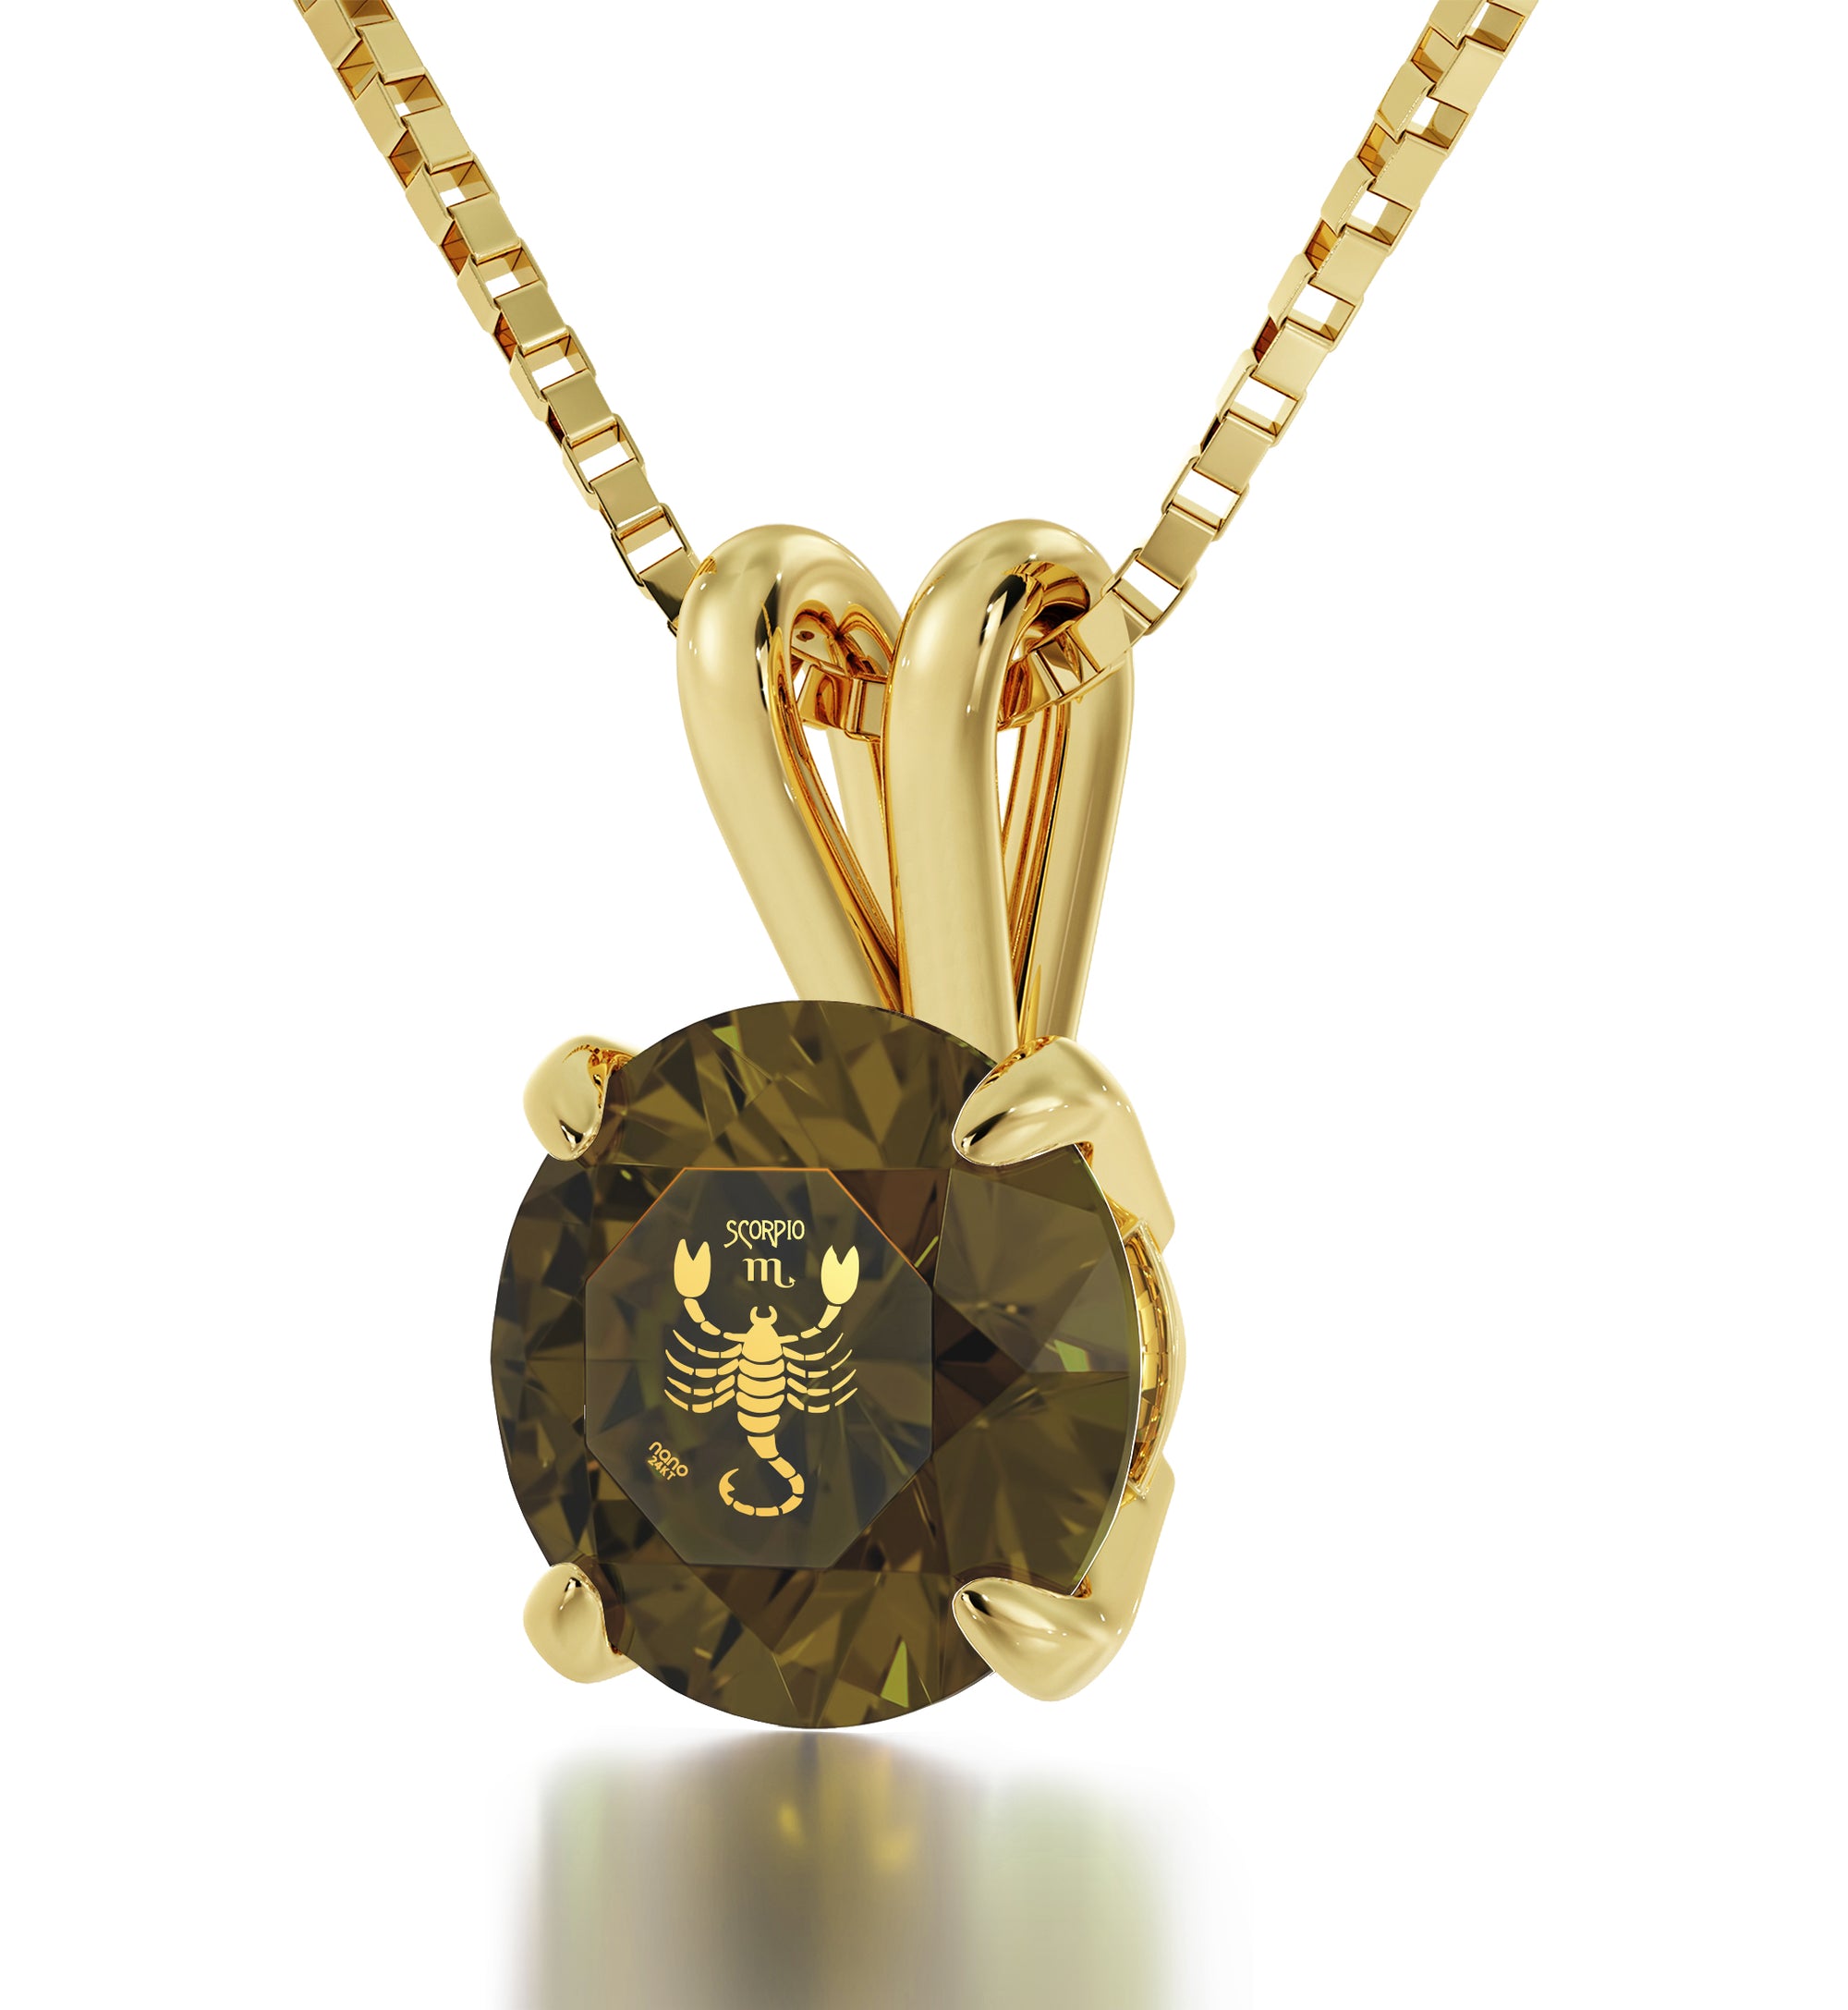 Unique Zodiac Jewelry for Women gold Jewelry Necklace NanoStyle inscribed Scorpio | 24k 